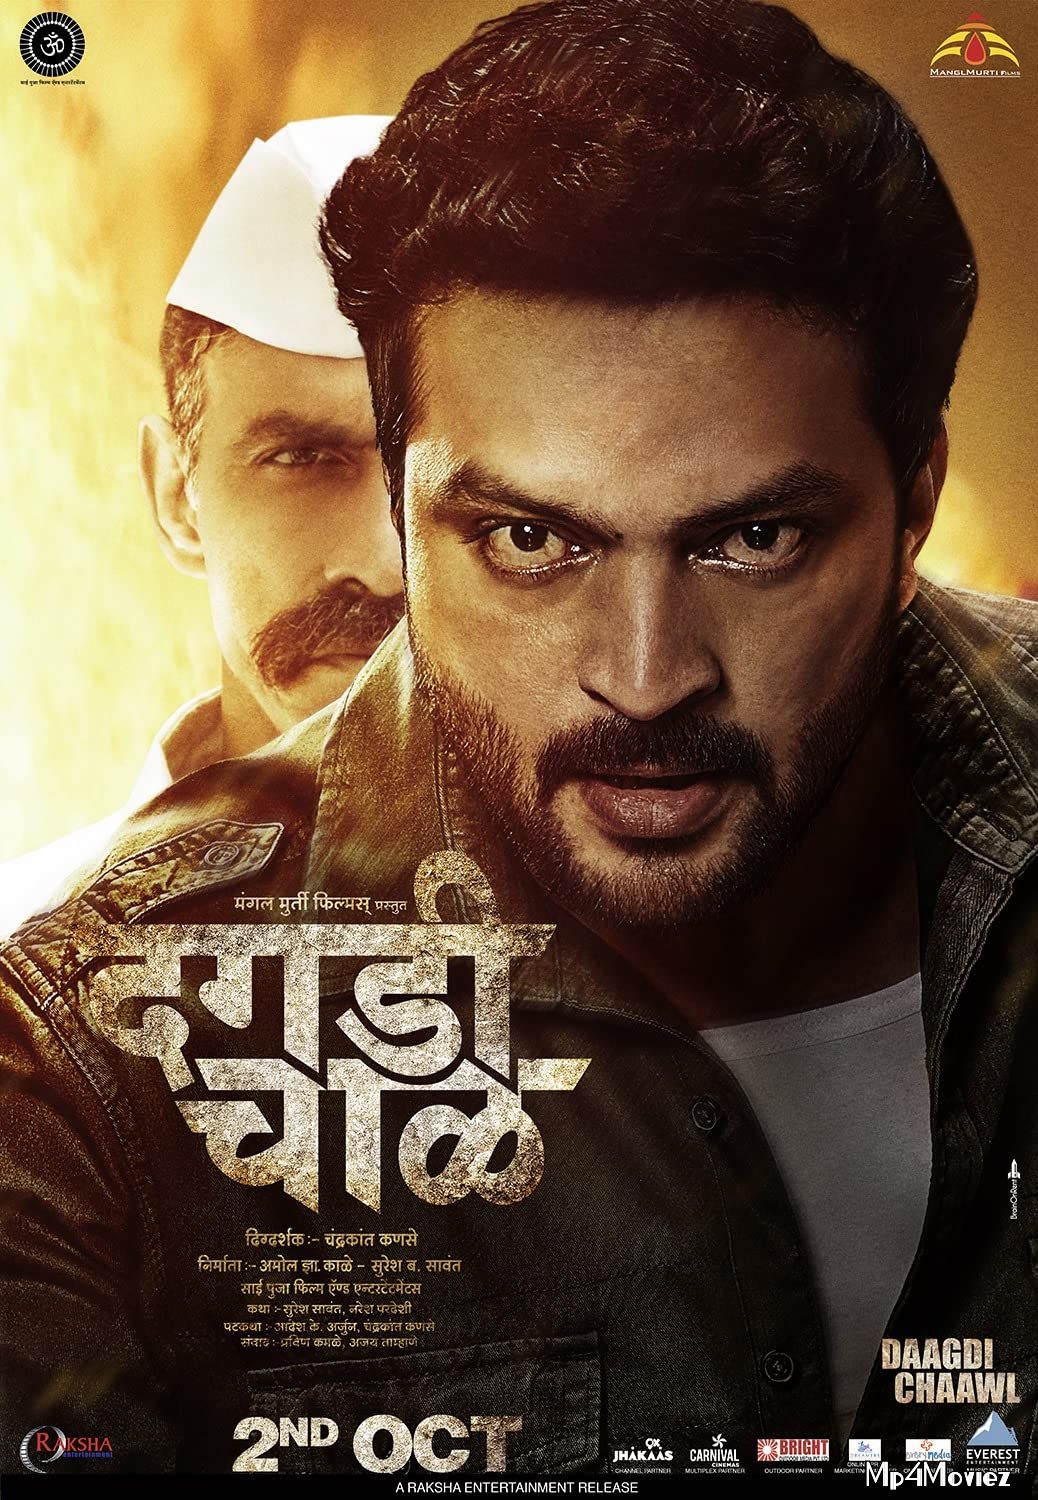 Dagadi Chaawl 2015 Marathi Full Movie download full movie